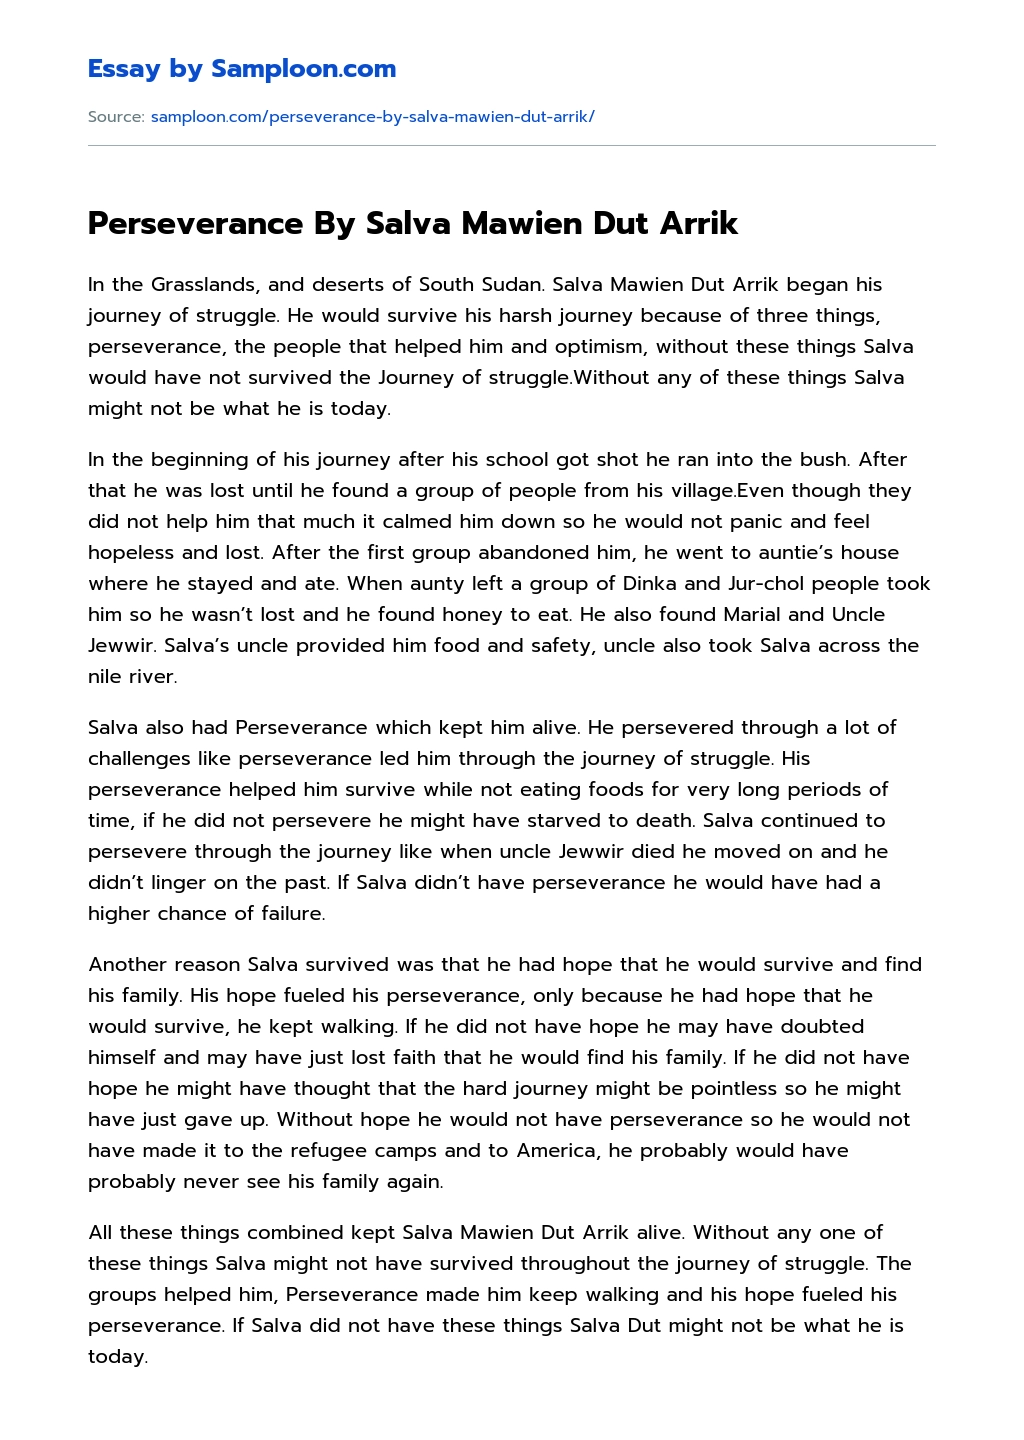 Perseverance By Salva Mawien Dut Arrik essay